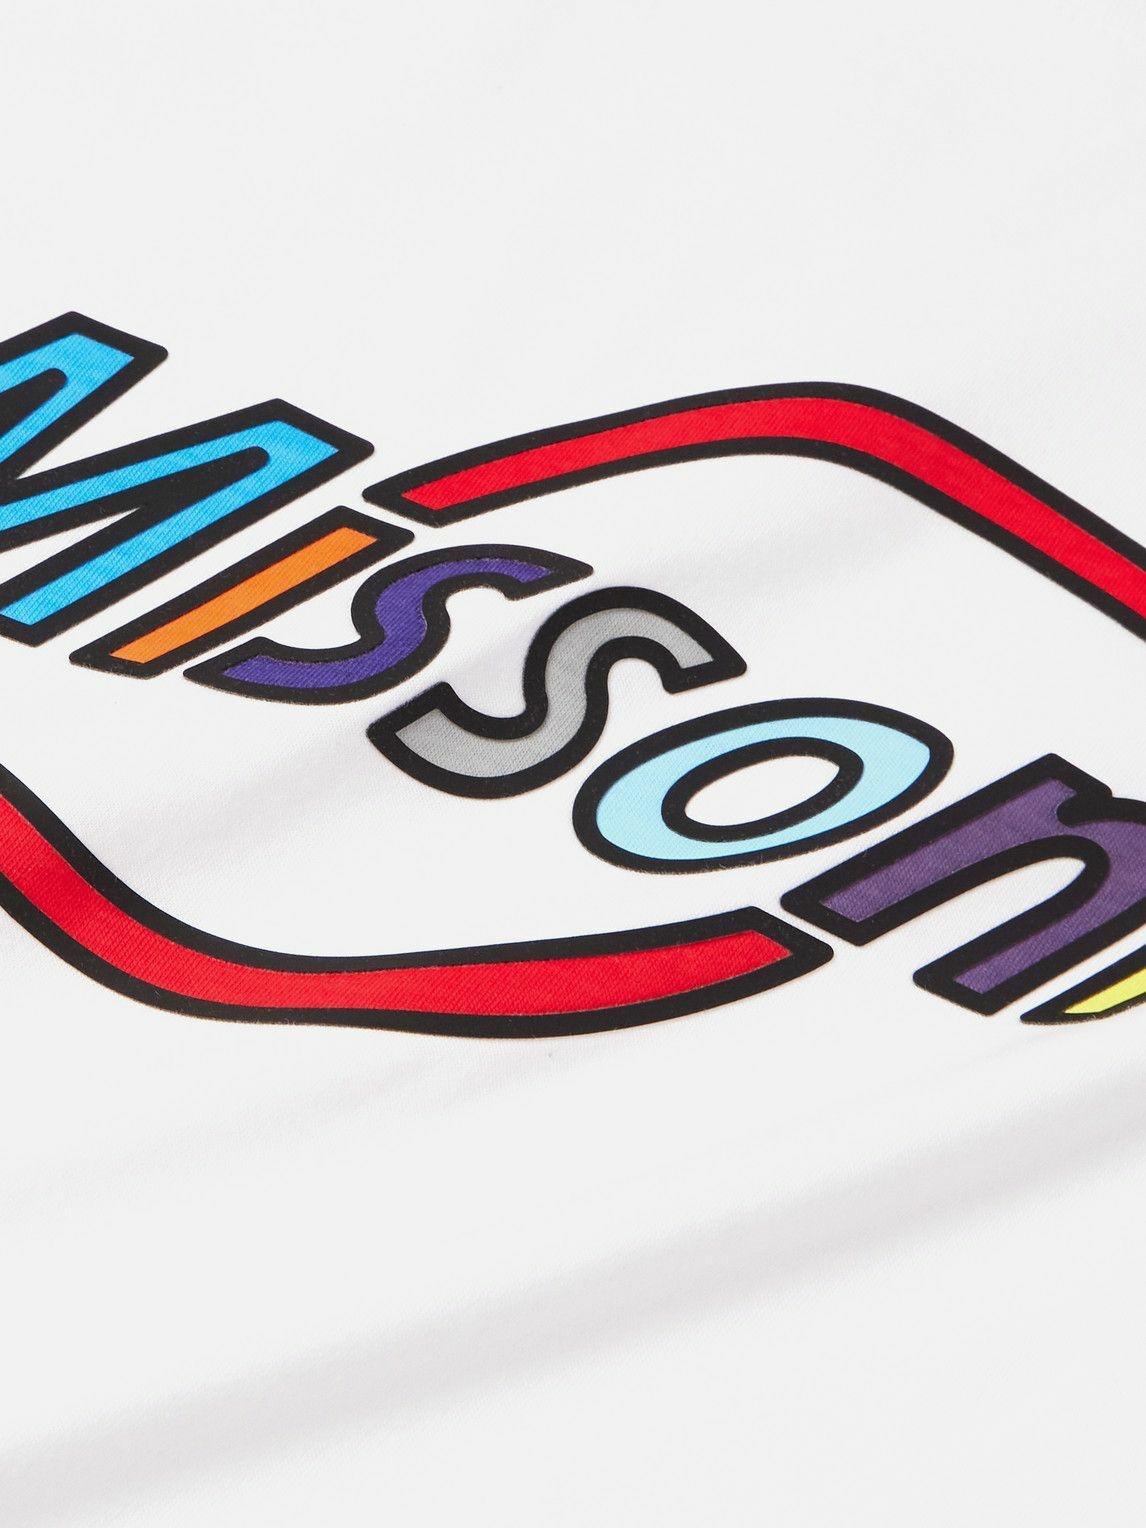 Missoni - Logo-Print Cotton-Jersey T-Shirt - White Missoni